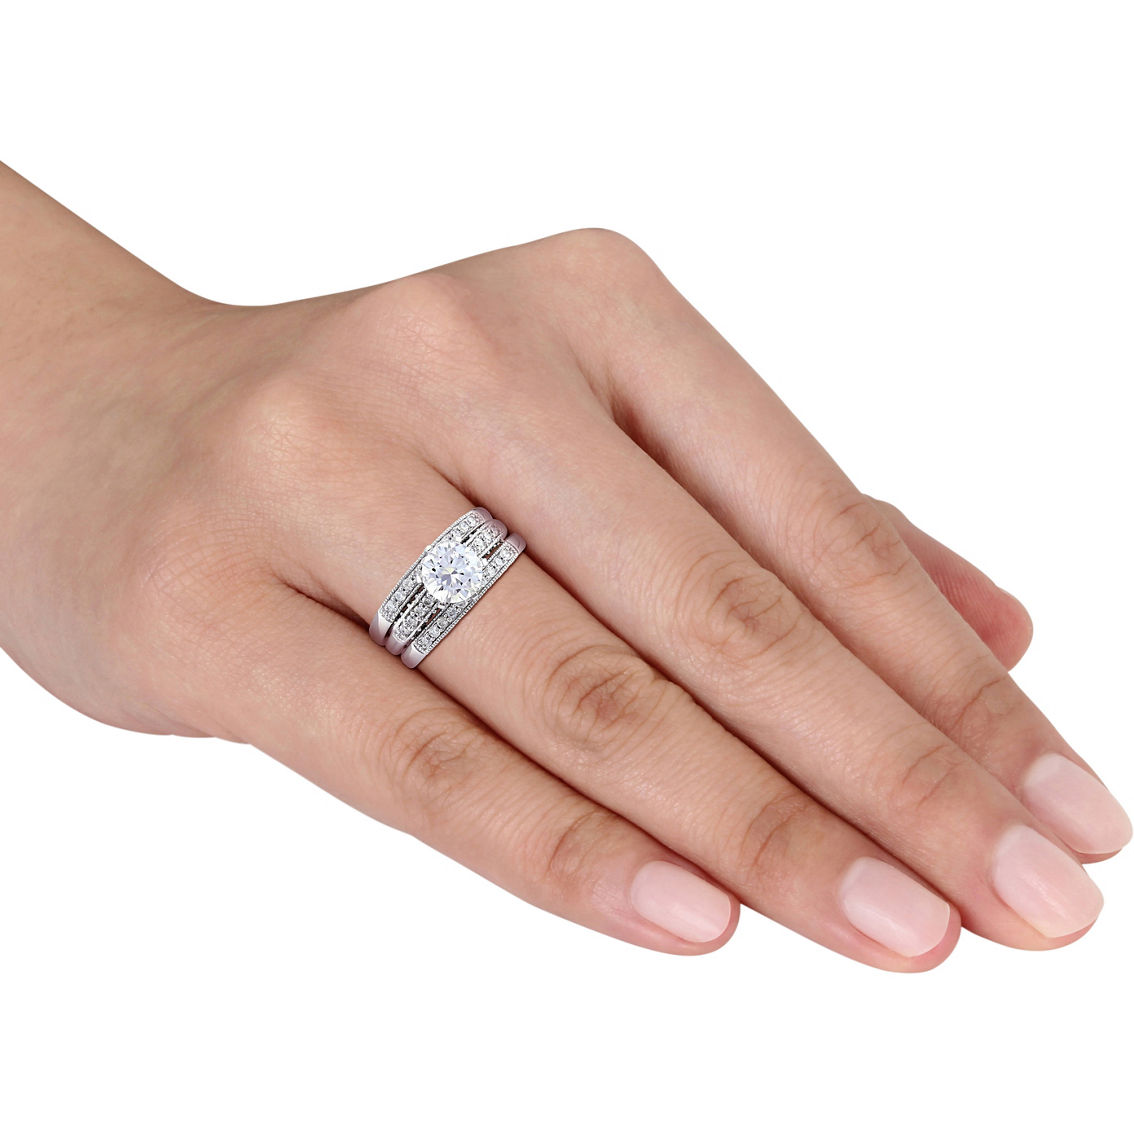 Sofia B. 10K White Gold Created White Sapphire and Diamond 3-Piece Bridal Ring Set - Image 5 of 5